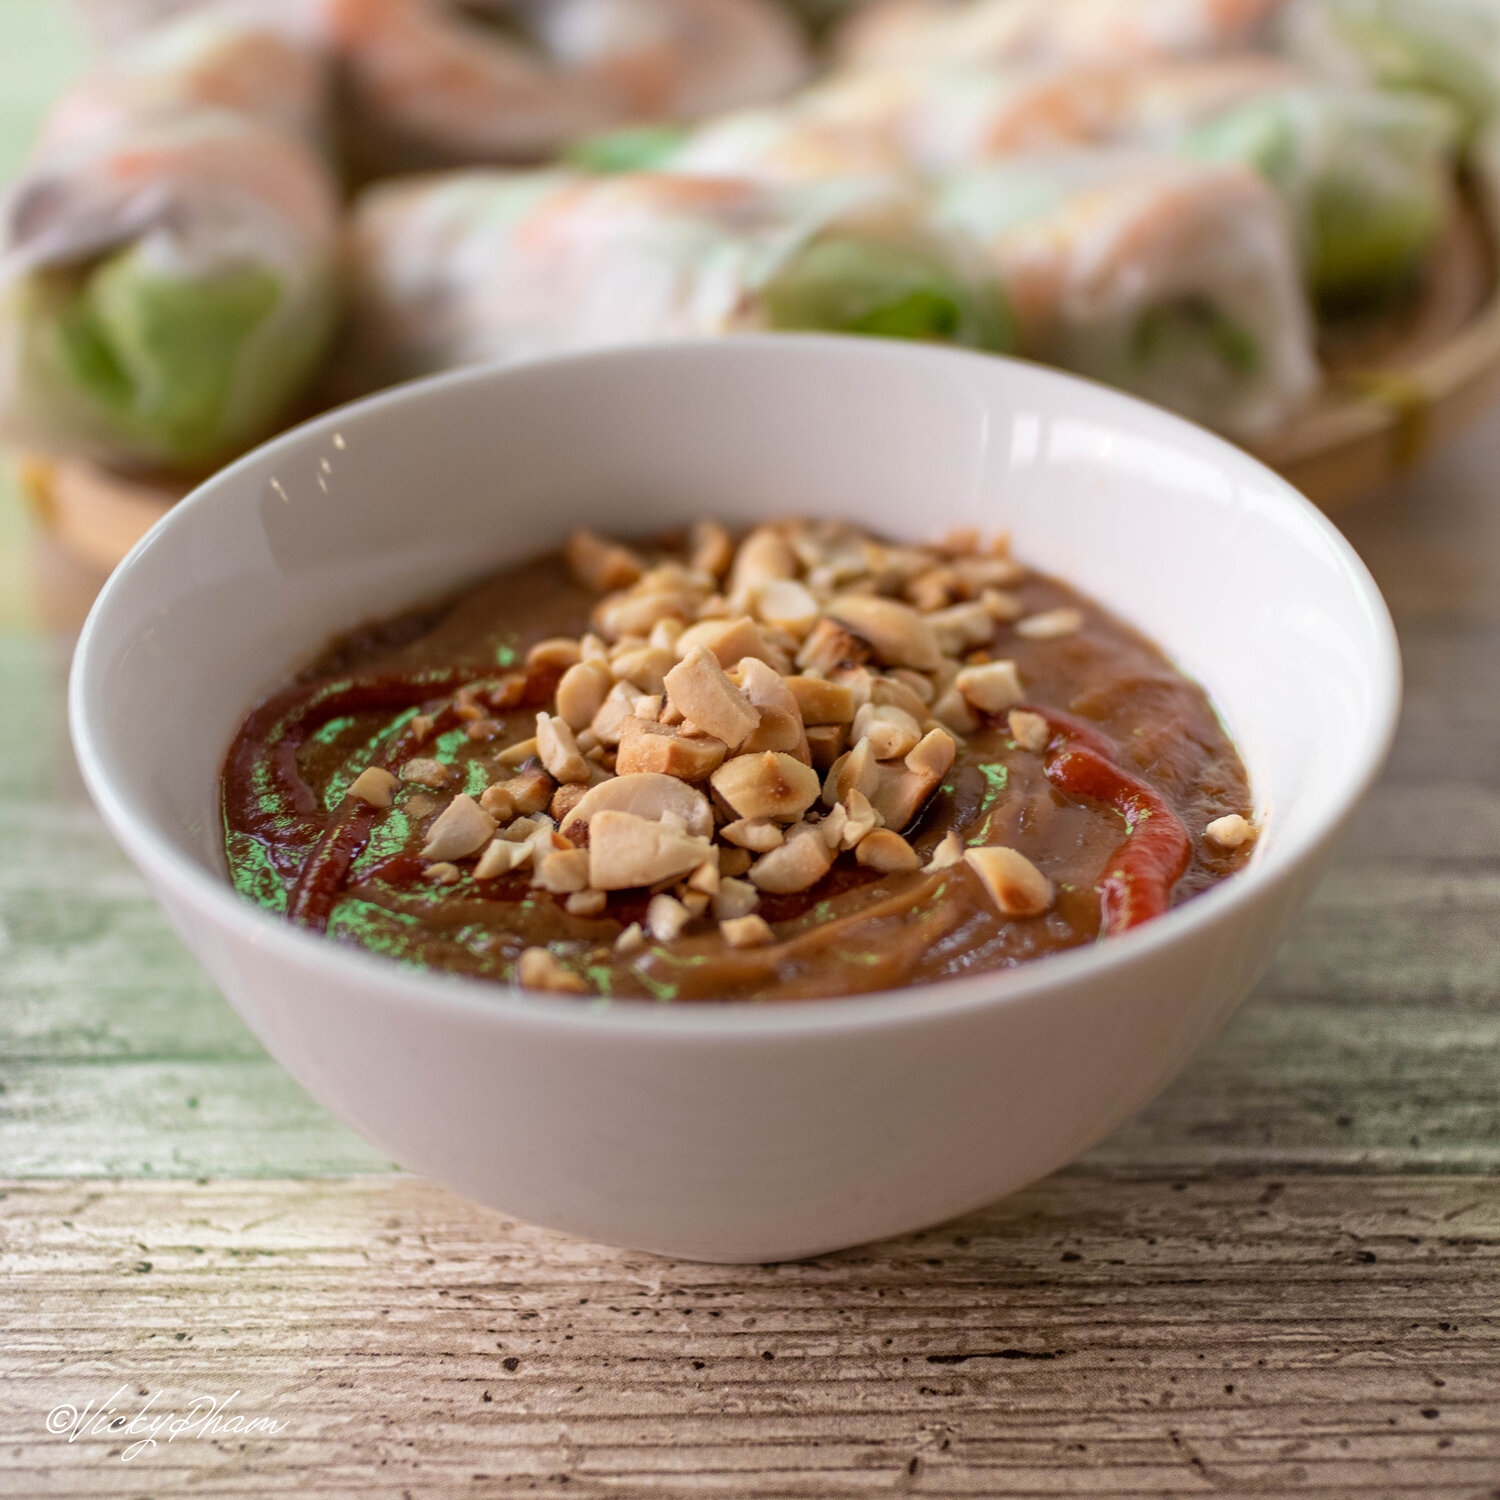 Recipe: Vietnamese salad rolls with peanut dipping sauce (Goi cuon)